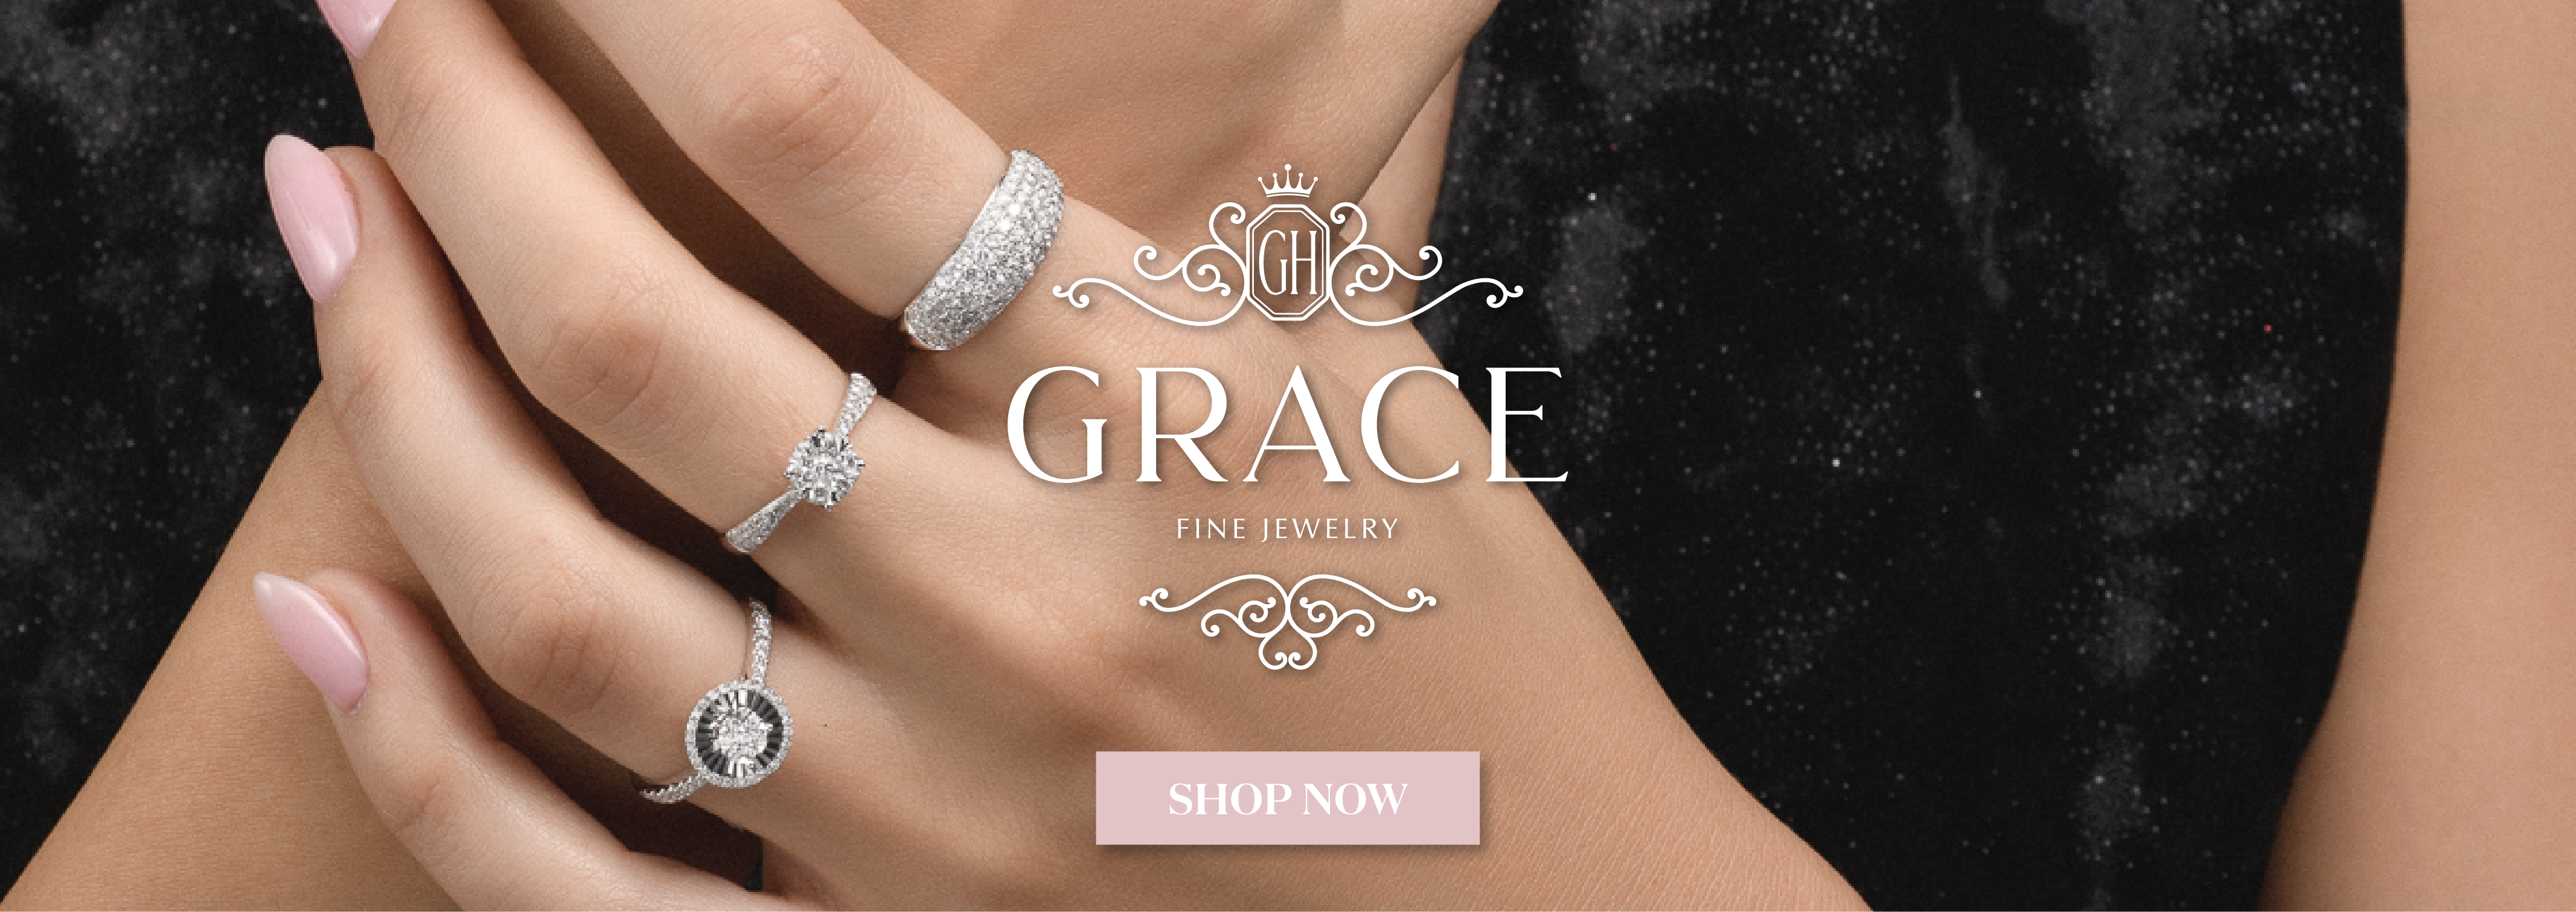 GRACE jewelry. shop now